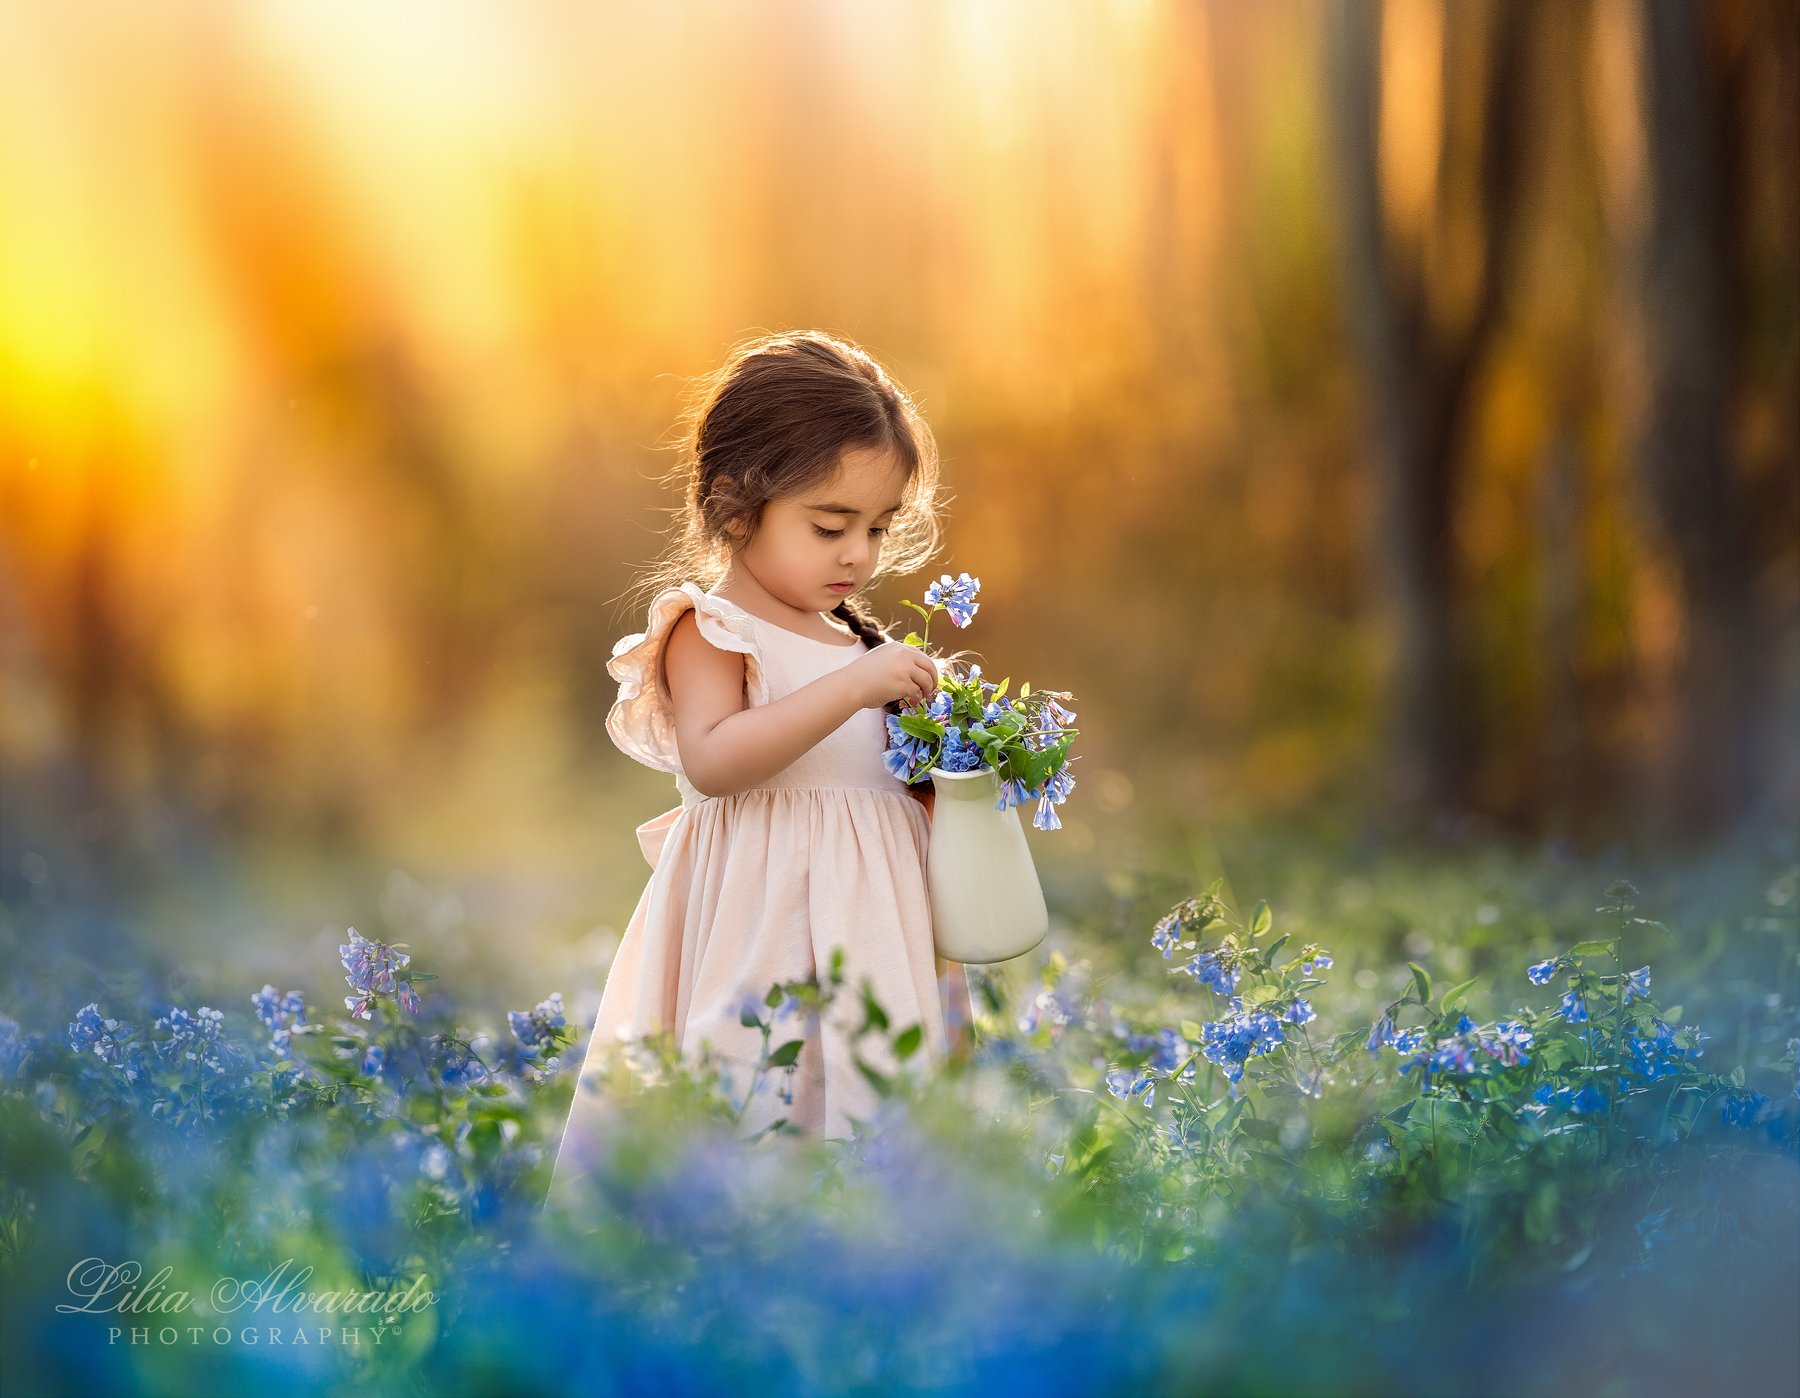 bluebells,spring,field,flowers,candid,child,girl,thoughtful,calm,poetic, brunette, Lilia Alvarado